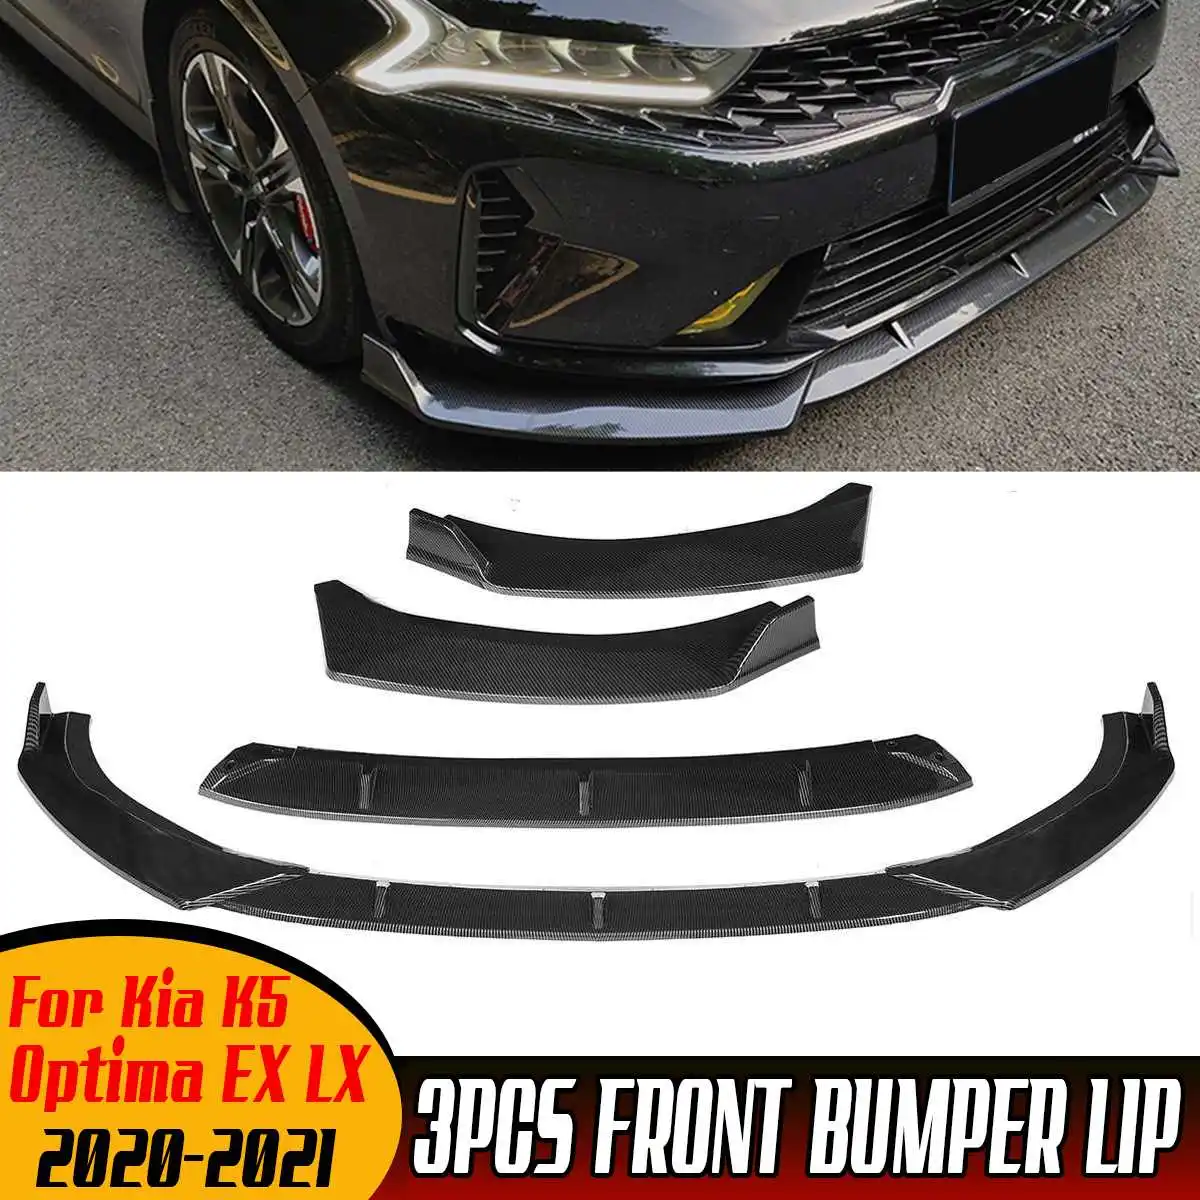 

New 3x Car Front Bumper Splitter Lip Body Kit Spoiler Deflector Lips Diffuser Lip Guard Cover For Kia K5 Optima EX LX 2020 2021